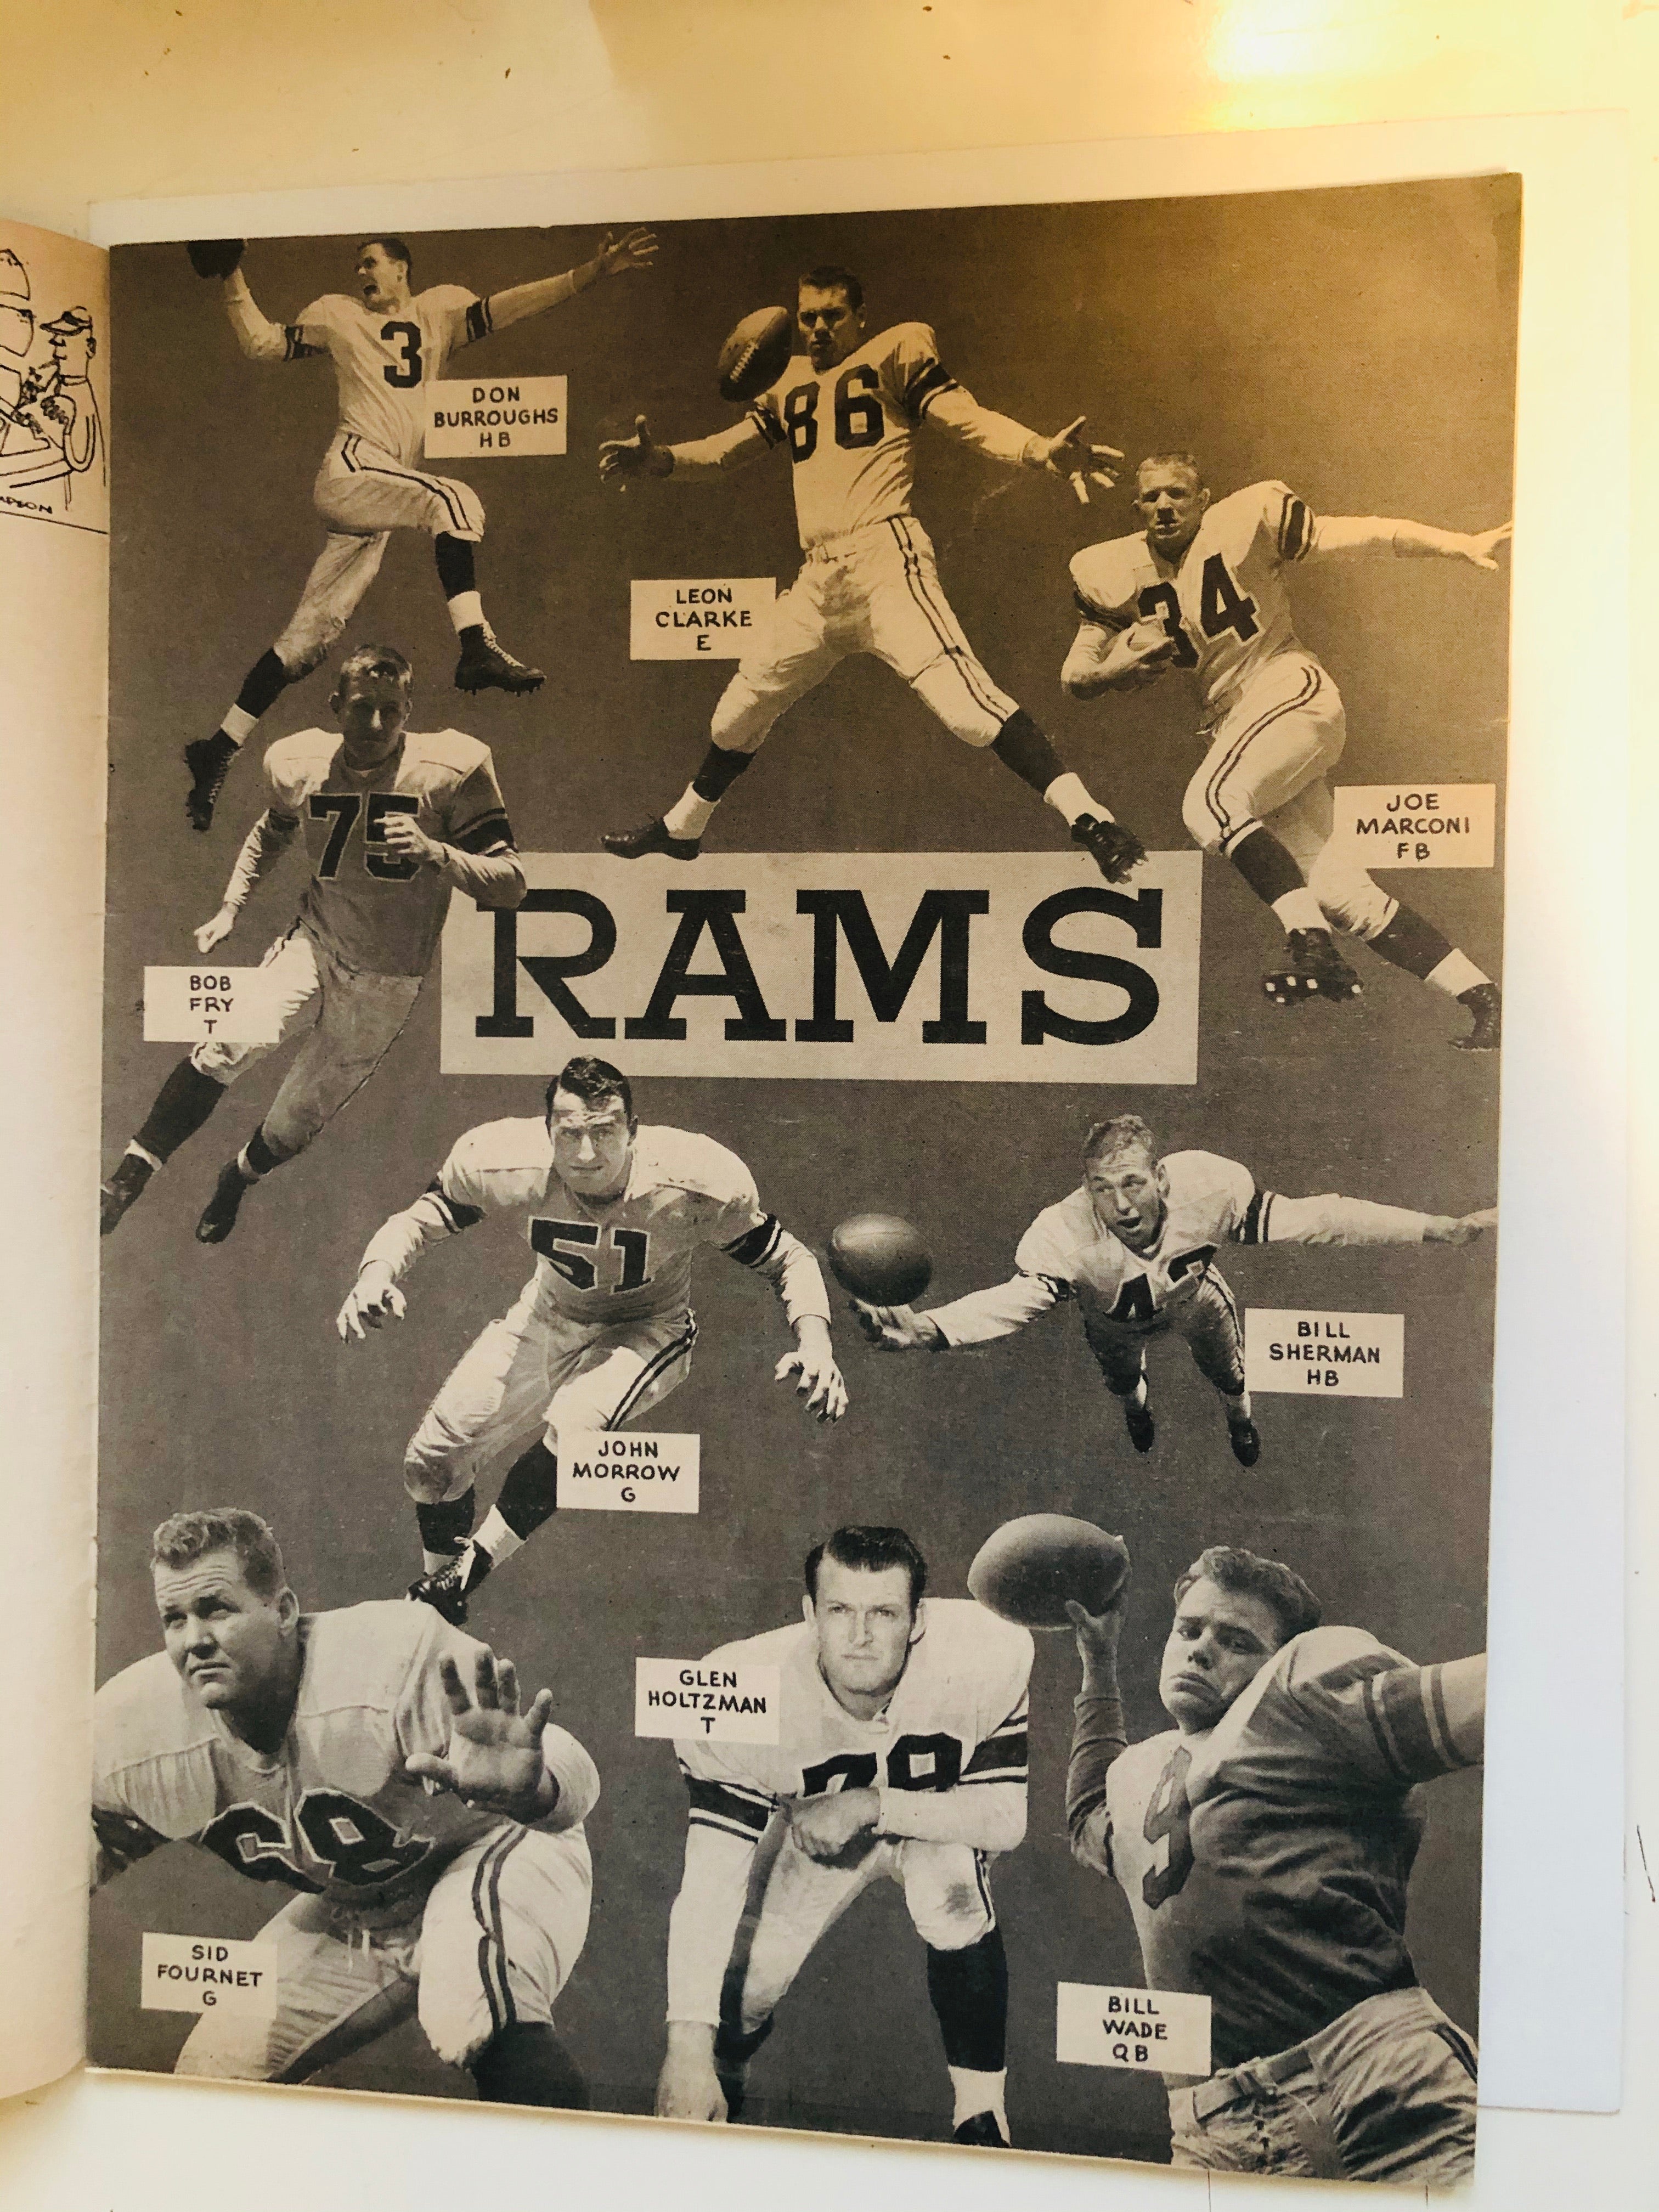 1956 LA Rams vs Philadelphia Eagles football game program